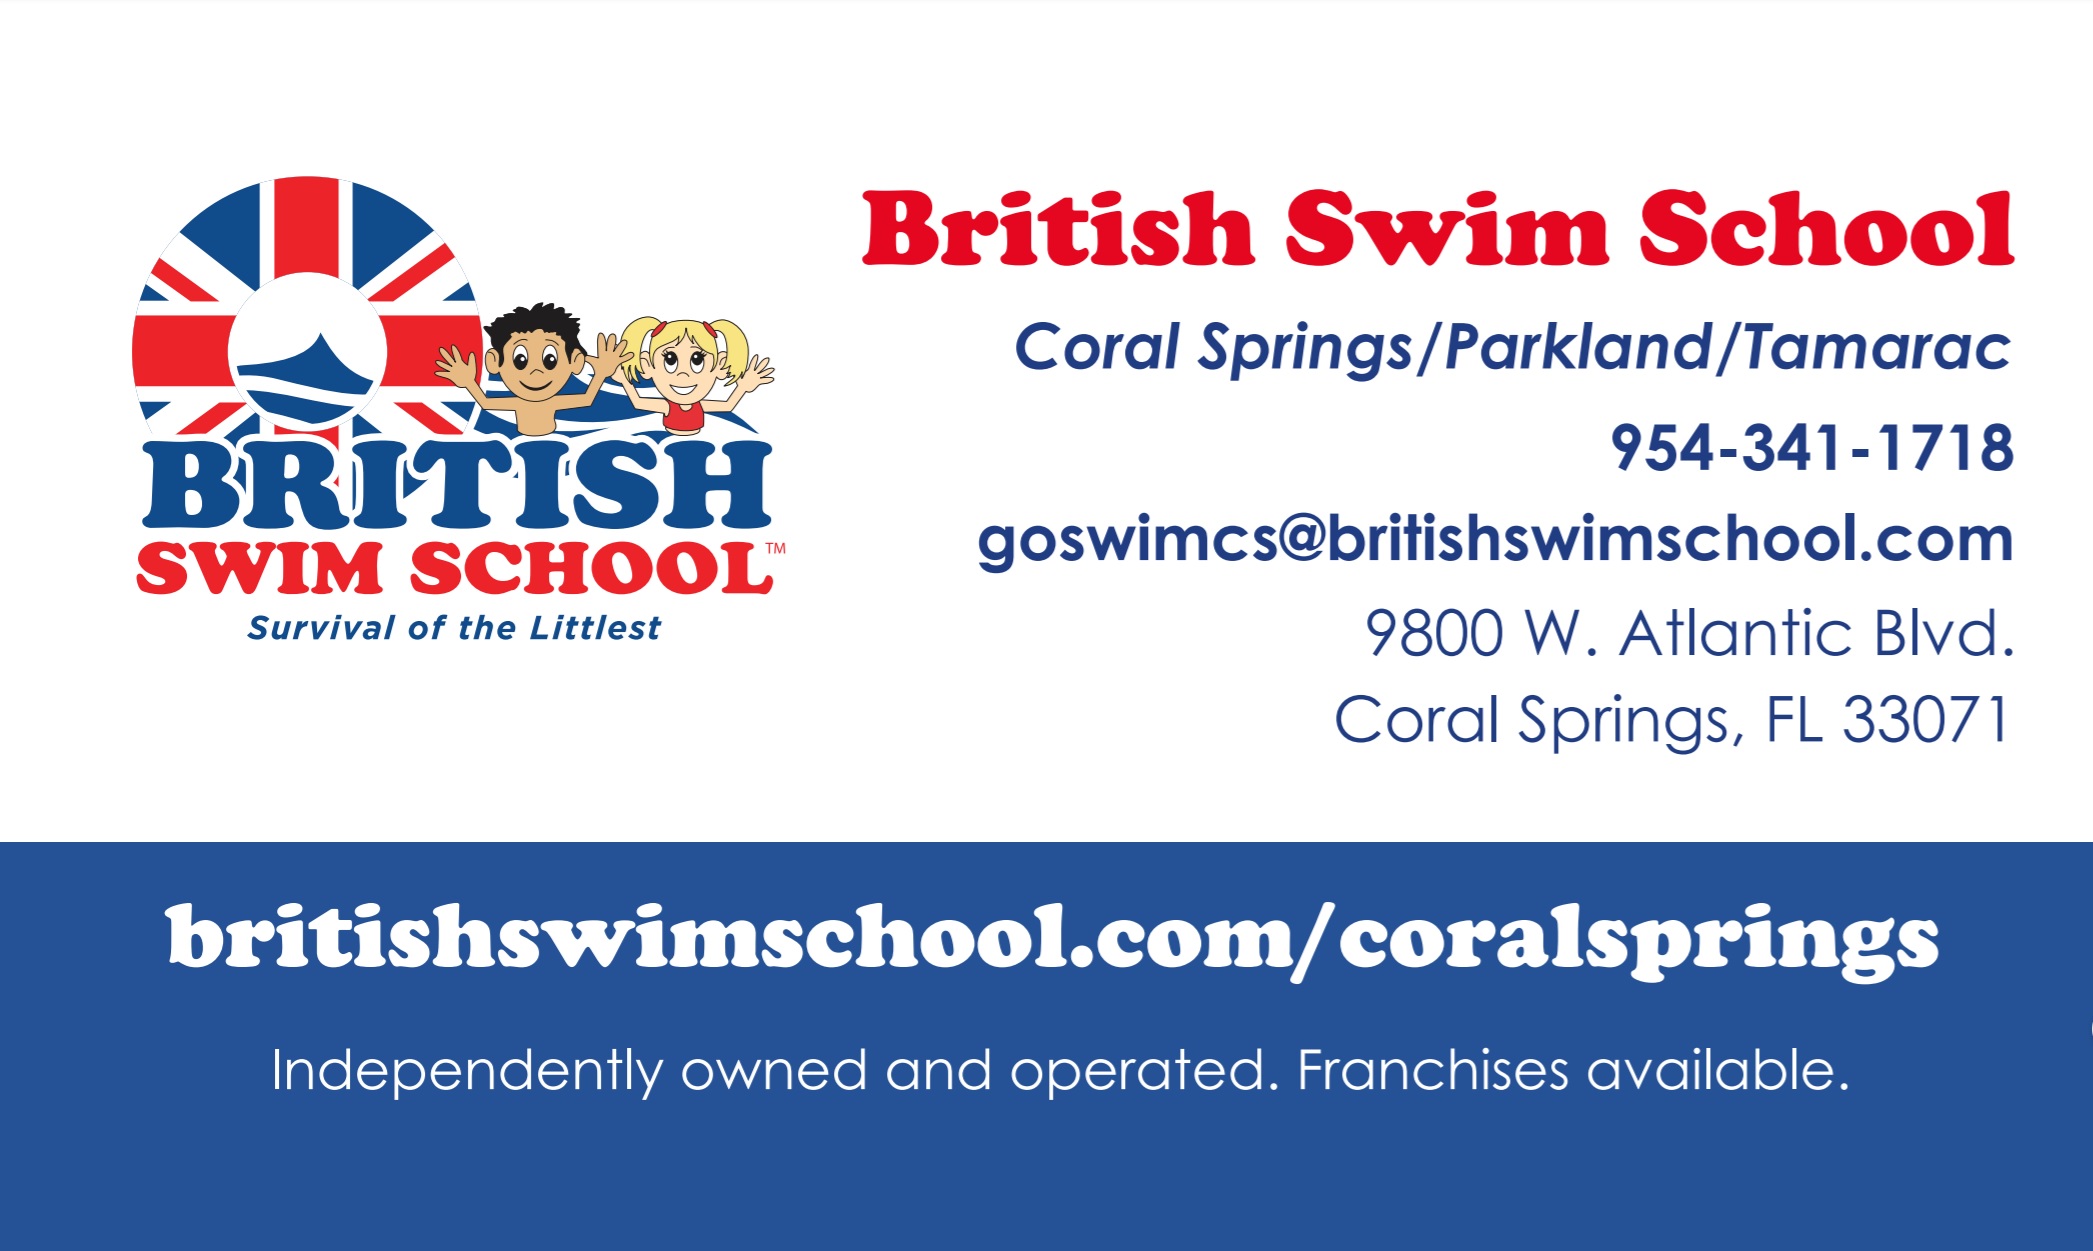 British Swim School-Business card ad